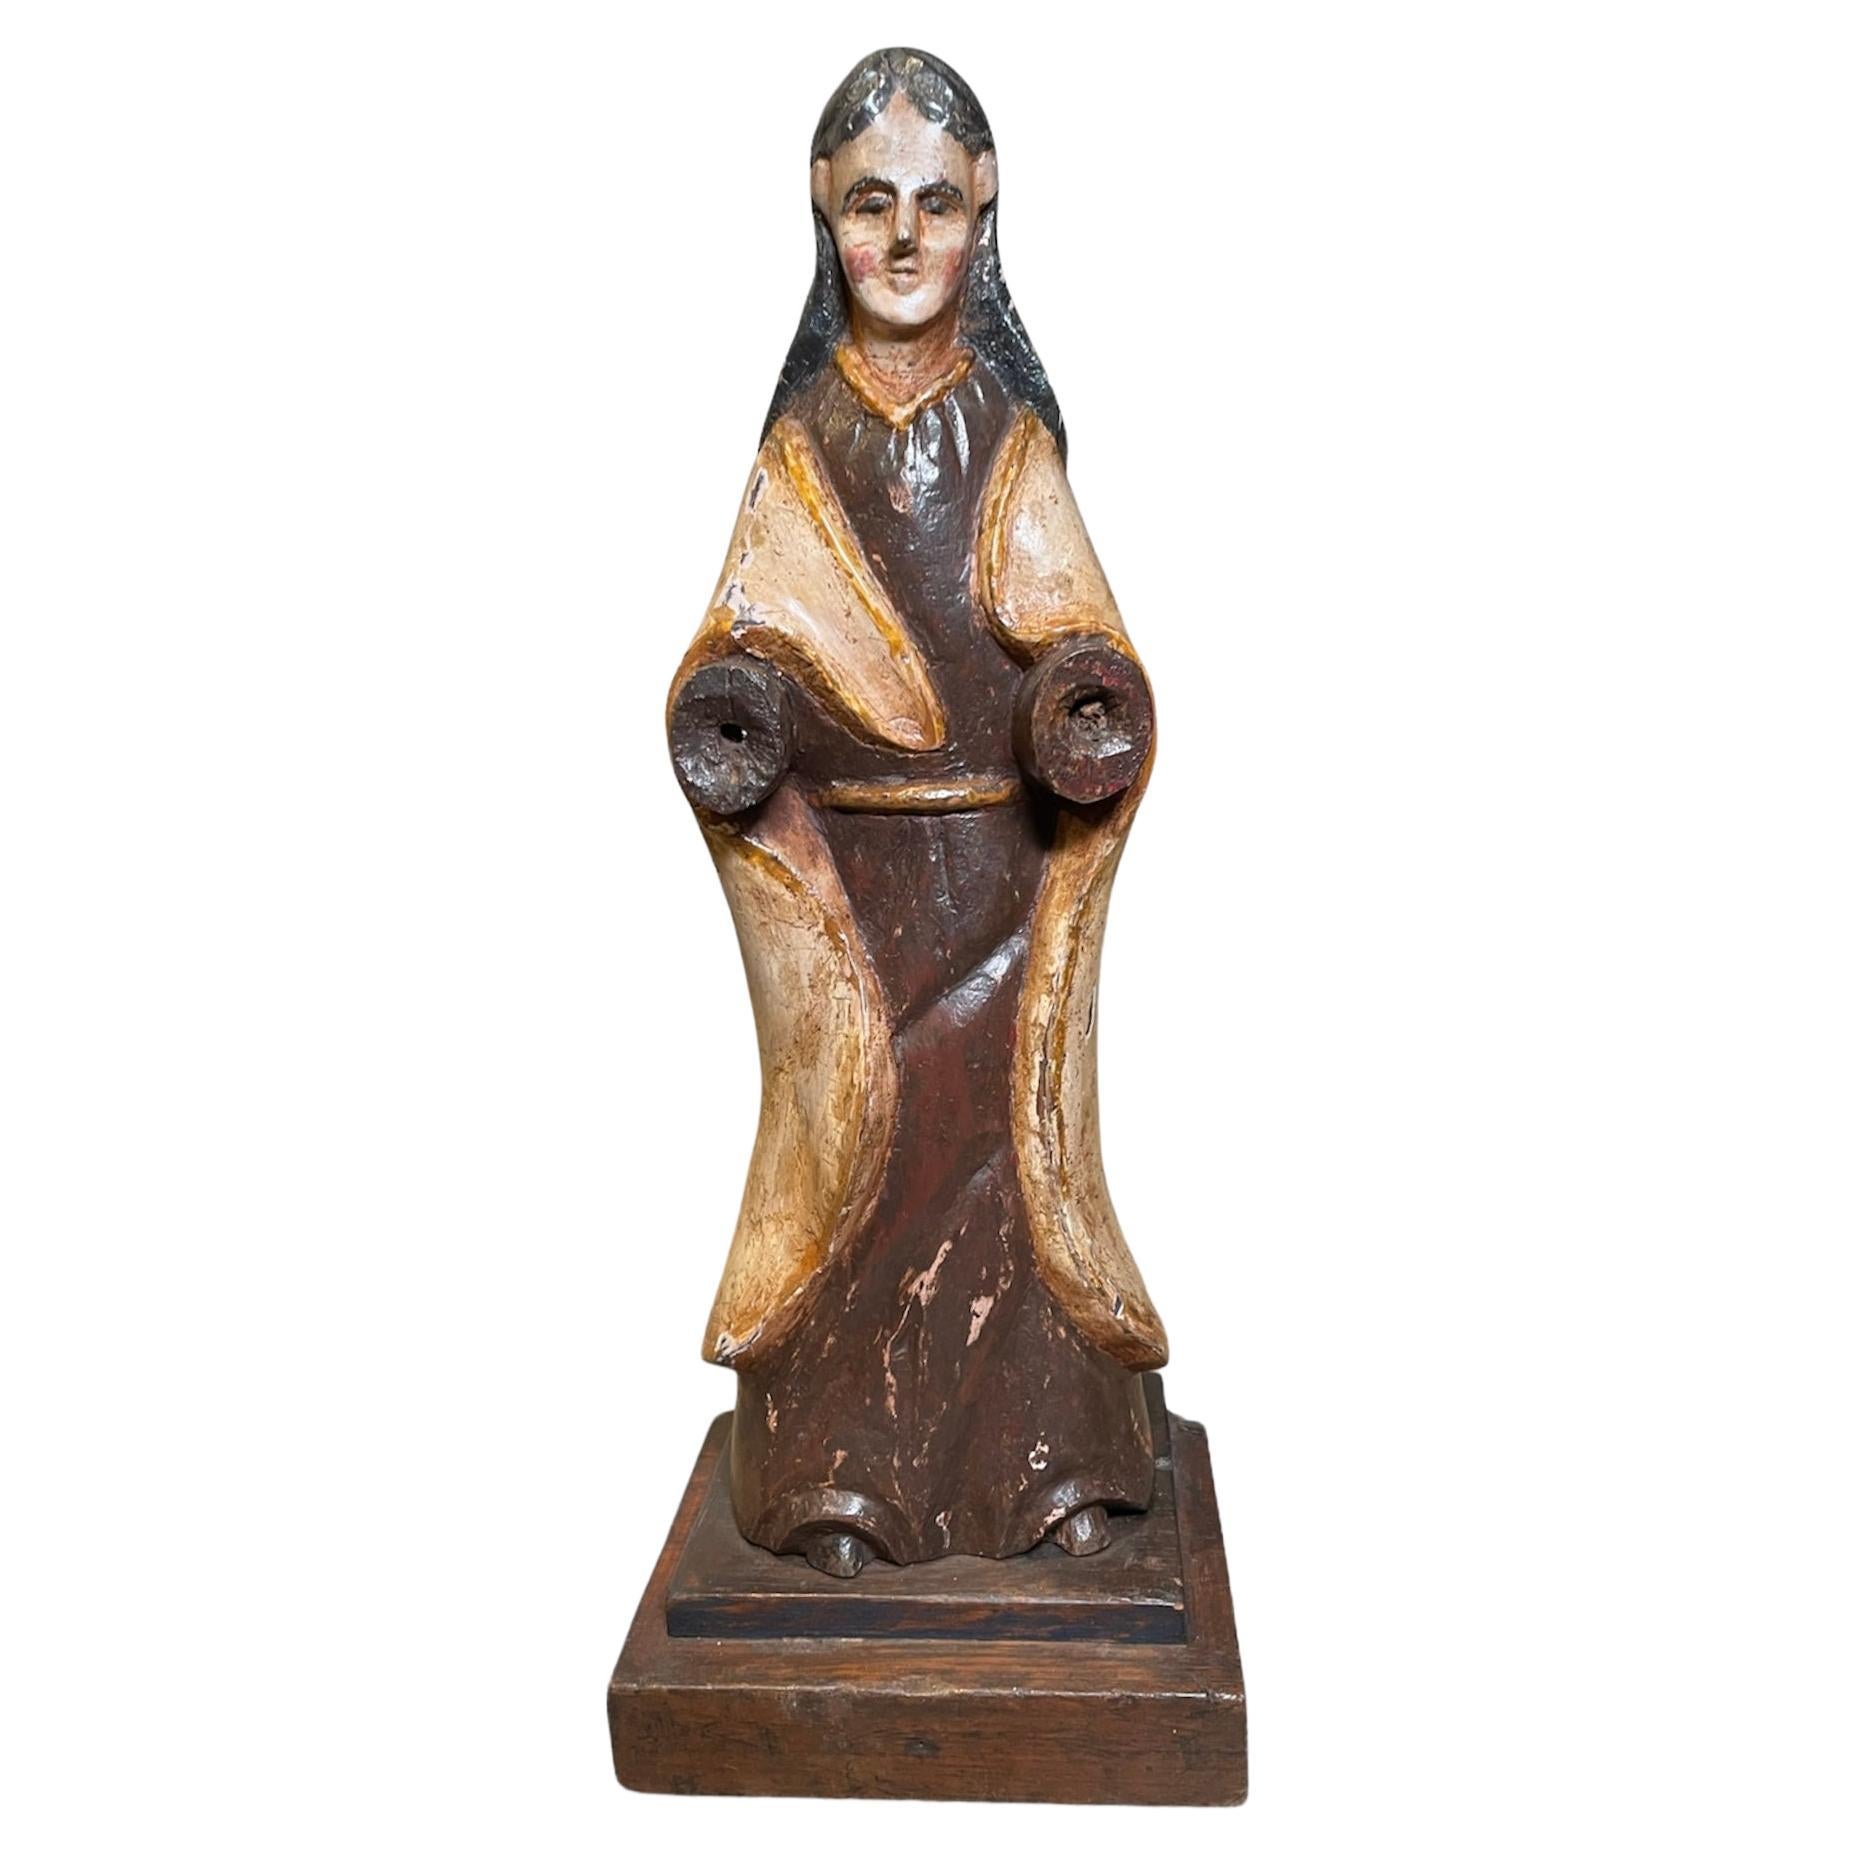 Puerto Rican Santos De Palos/Wood Carved Sculpture of Our Lady of Mount Carmel